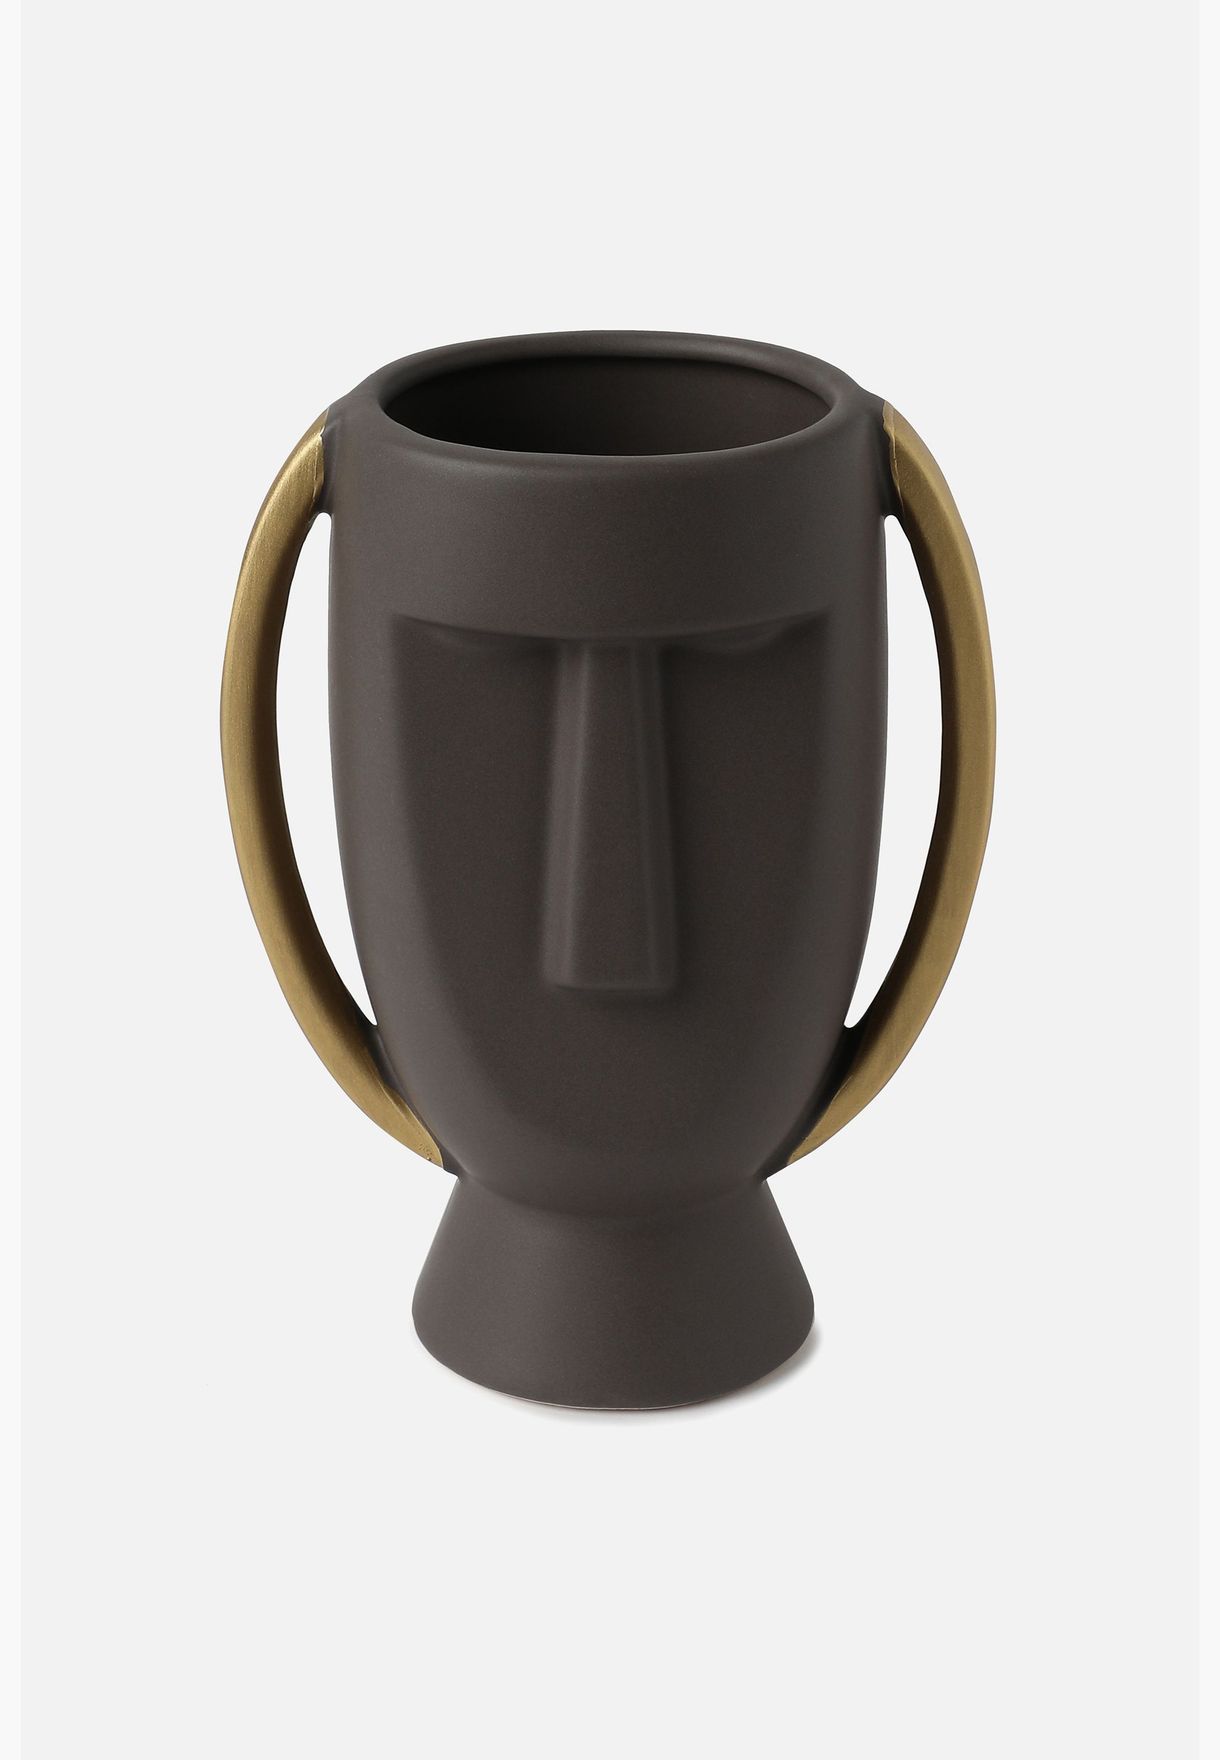 Trophy Shaped Modern Ceramic Flower Vase For Home Decor 